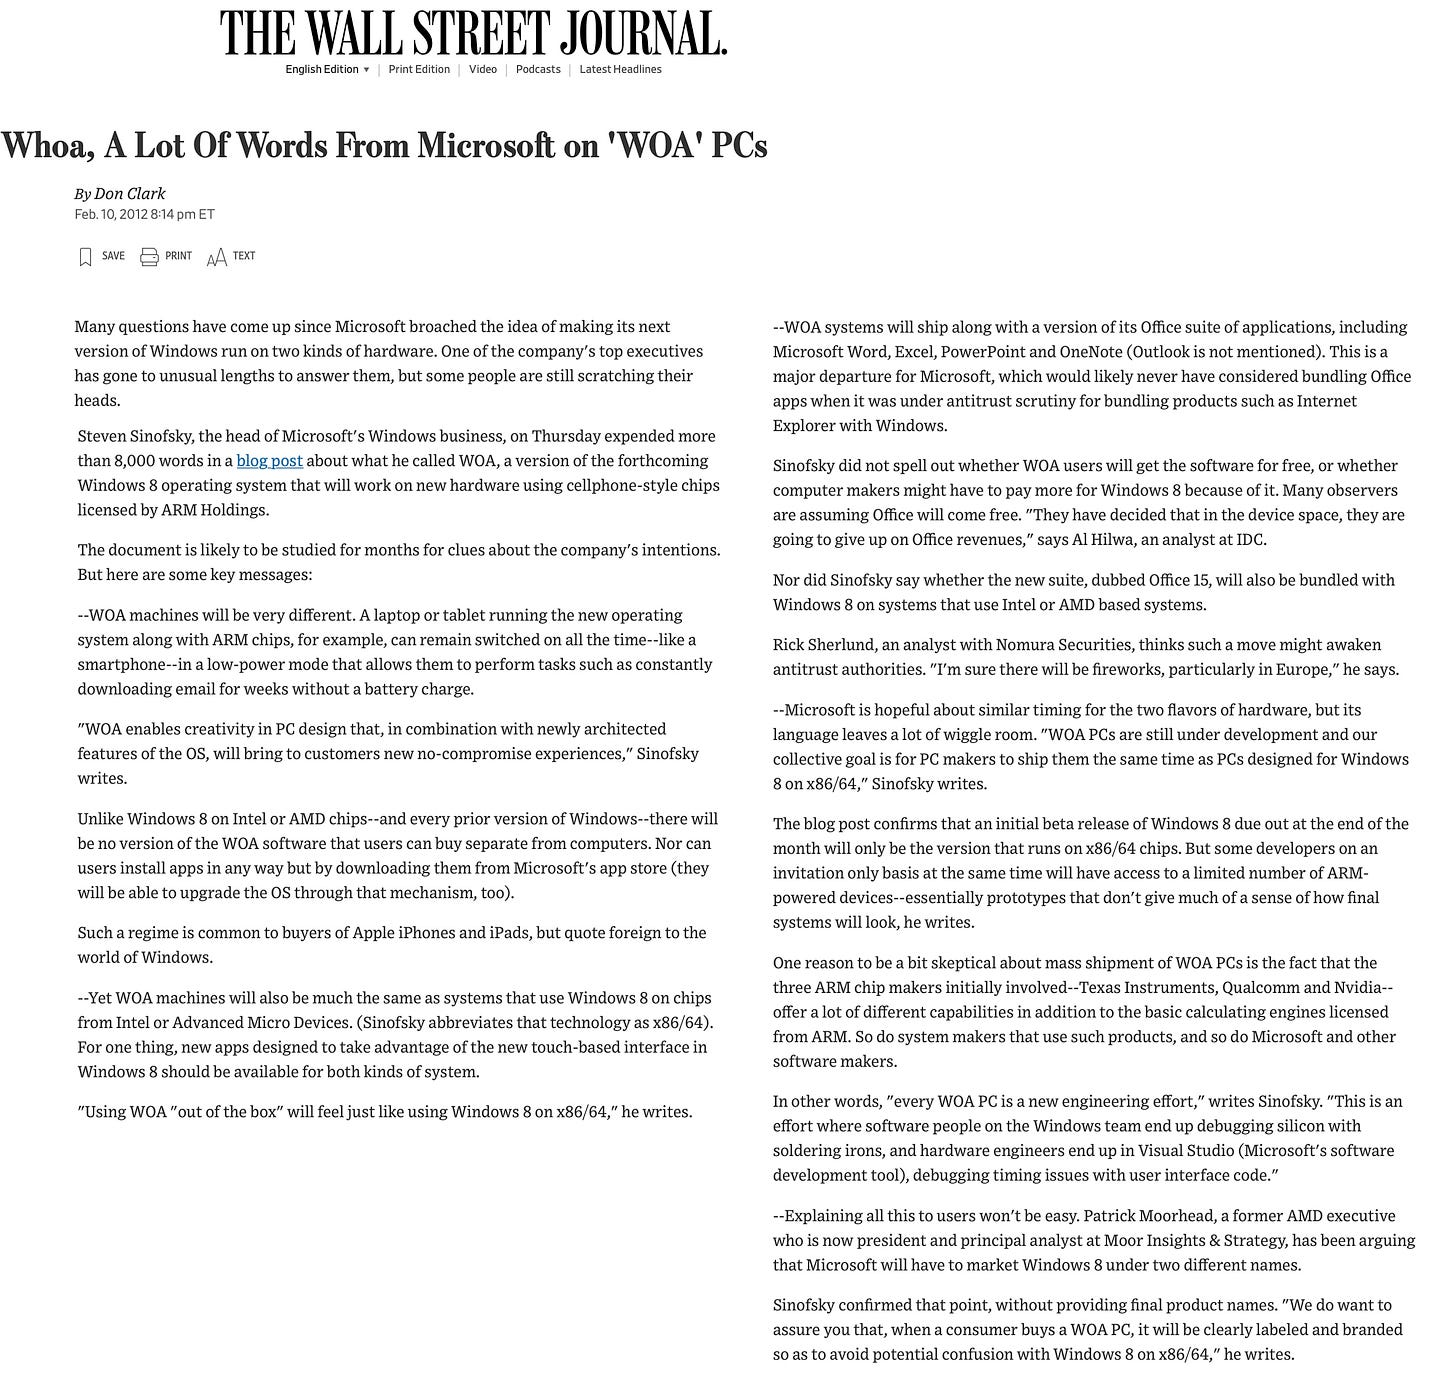 Wall Street Journal headline "Whoa, A Lot Of Words From Microsoft on 'WOA' PCs